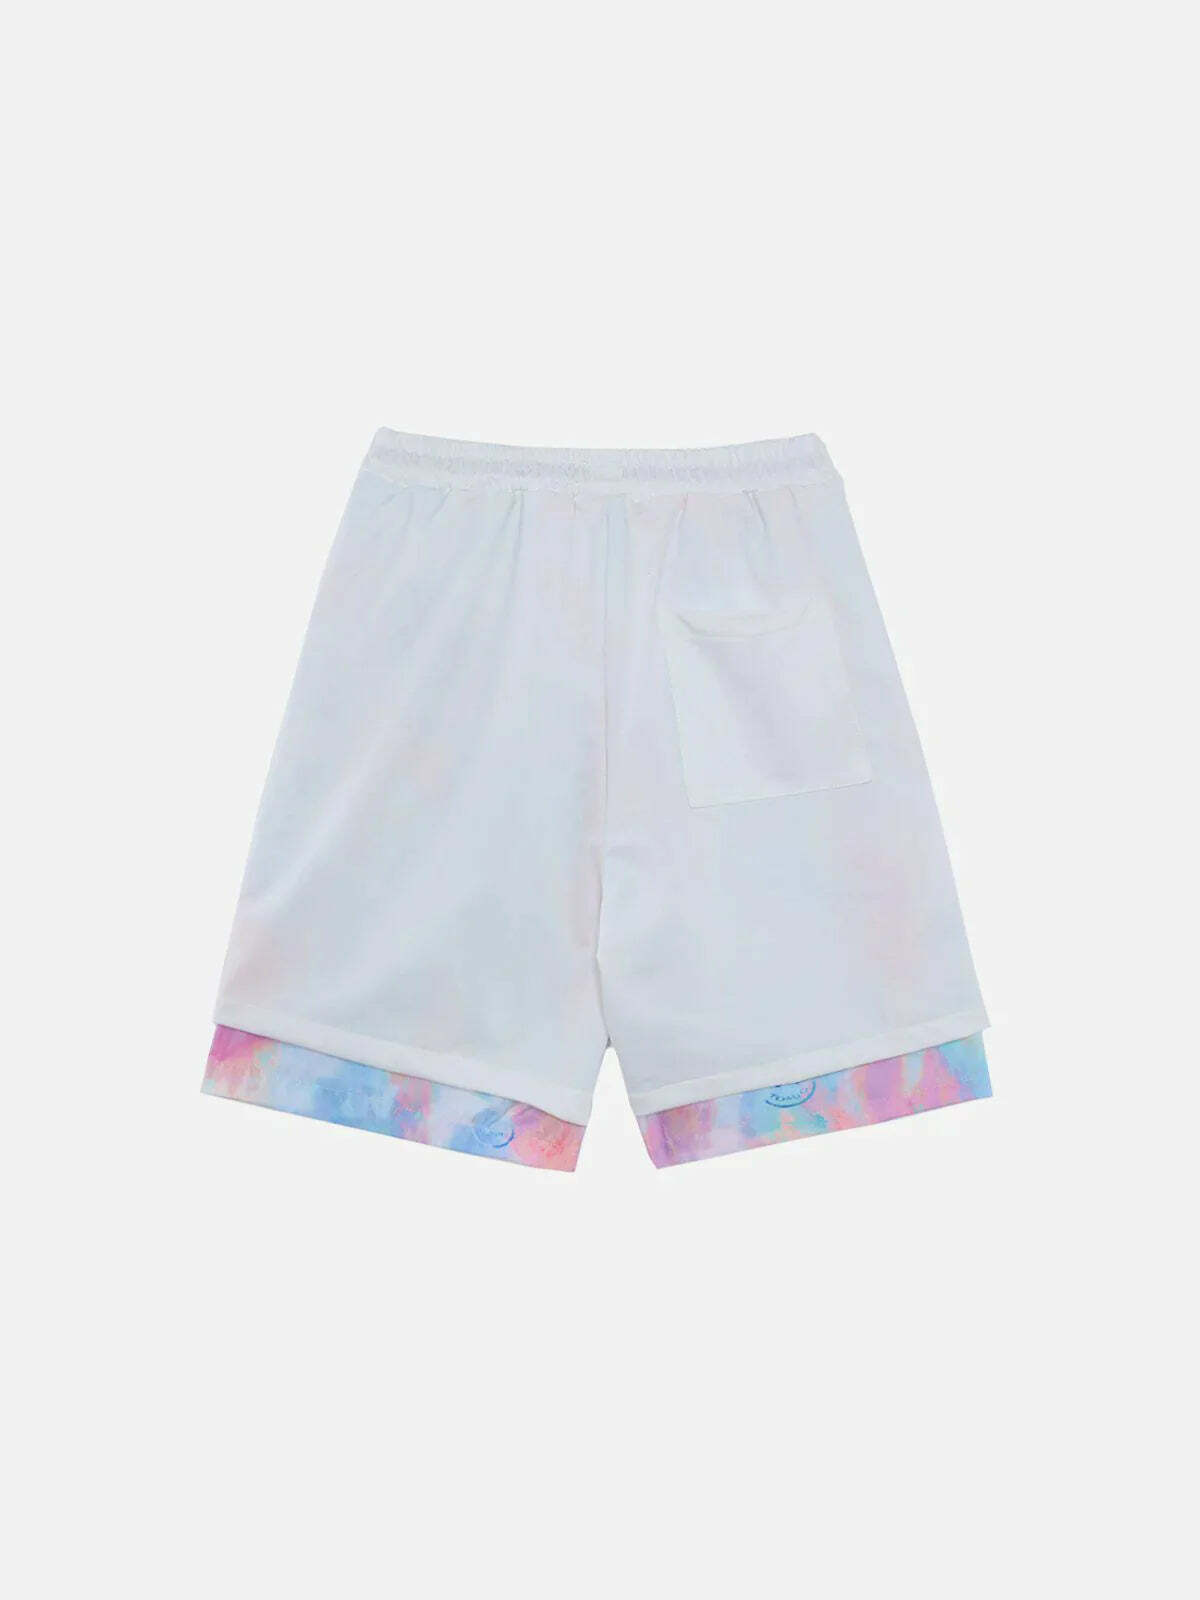 faux twopiece cargo shorts edgy streetwear icon 5514